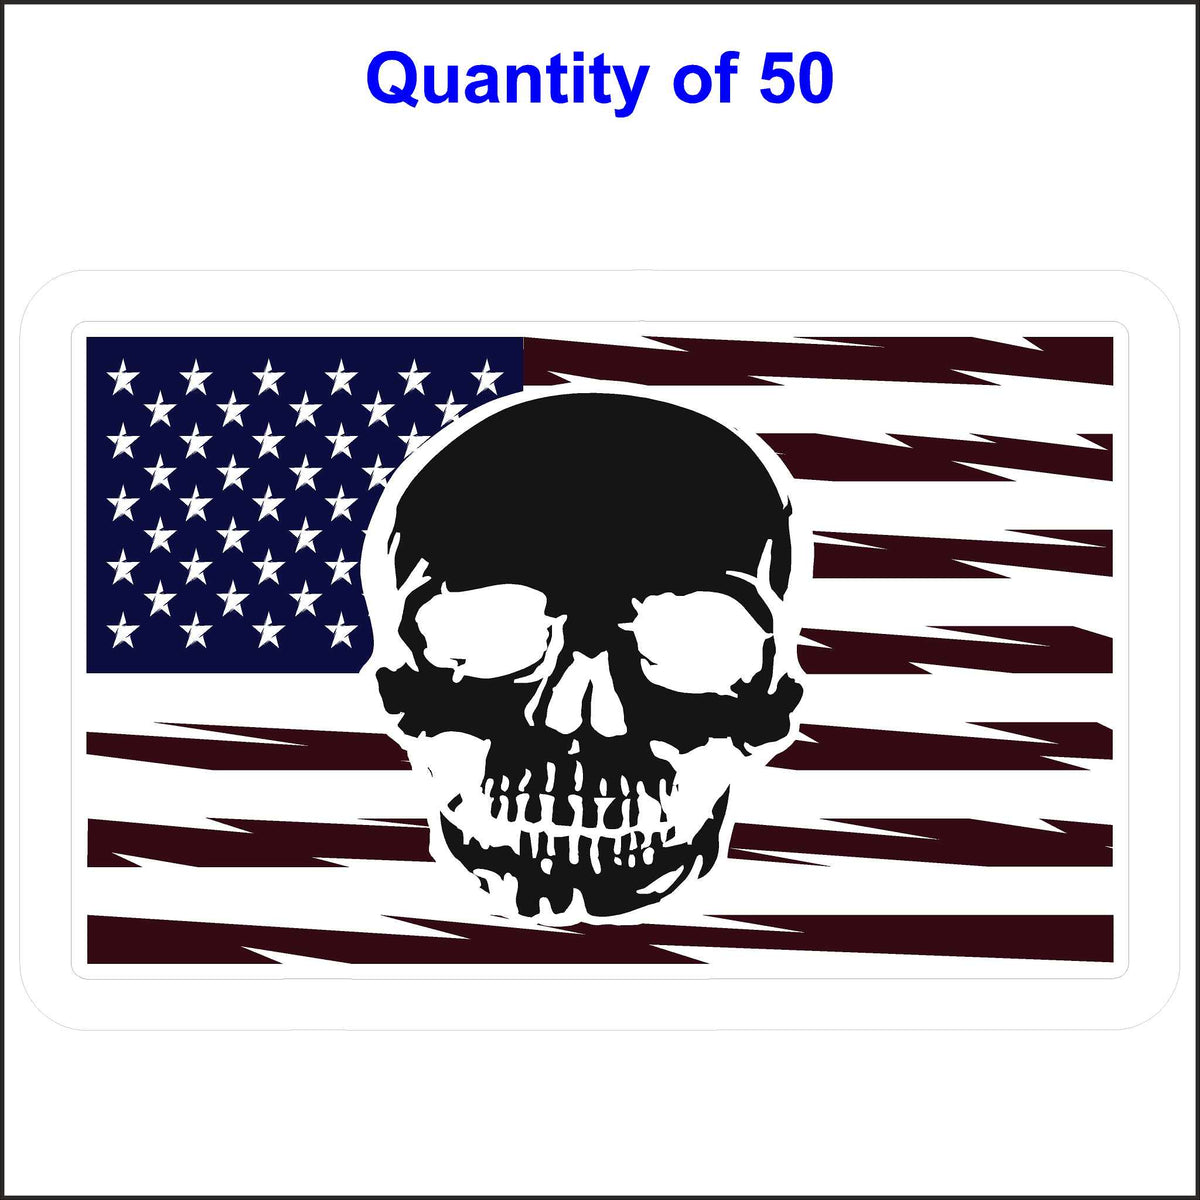 Skull on A Flag Sticker. 50 Quantity.